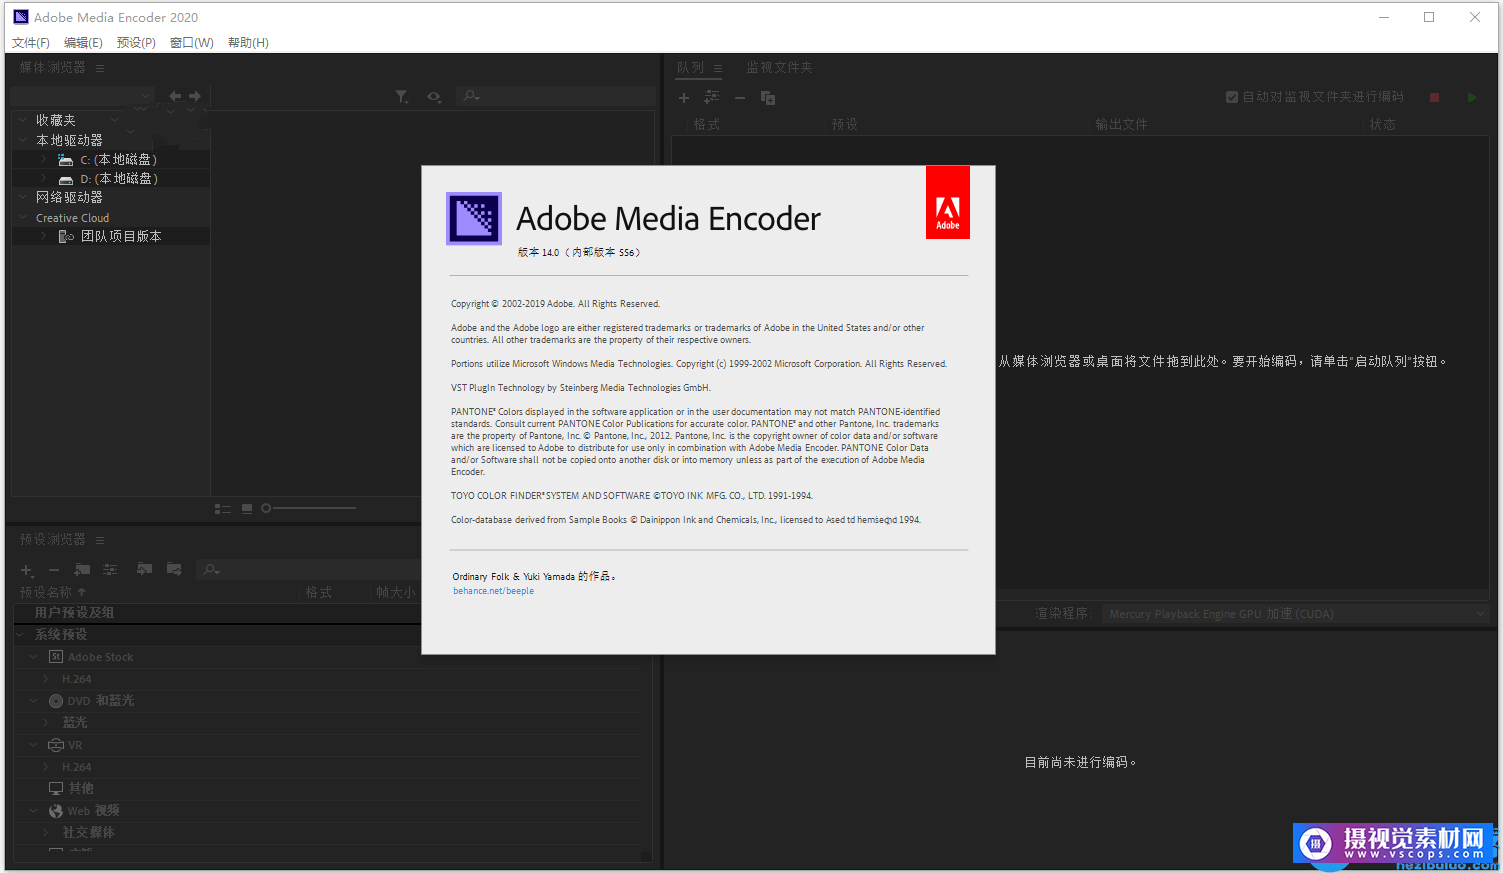 Adobe Media Encoder 2023 v23.5.0.51 download the last version for windows